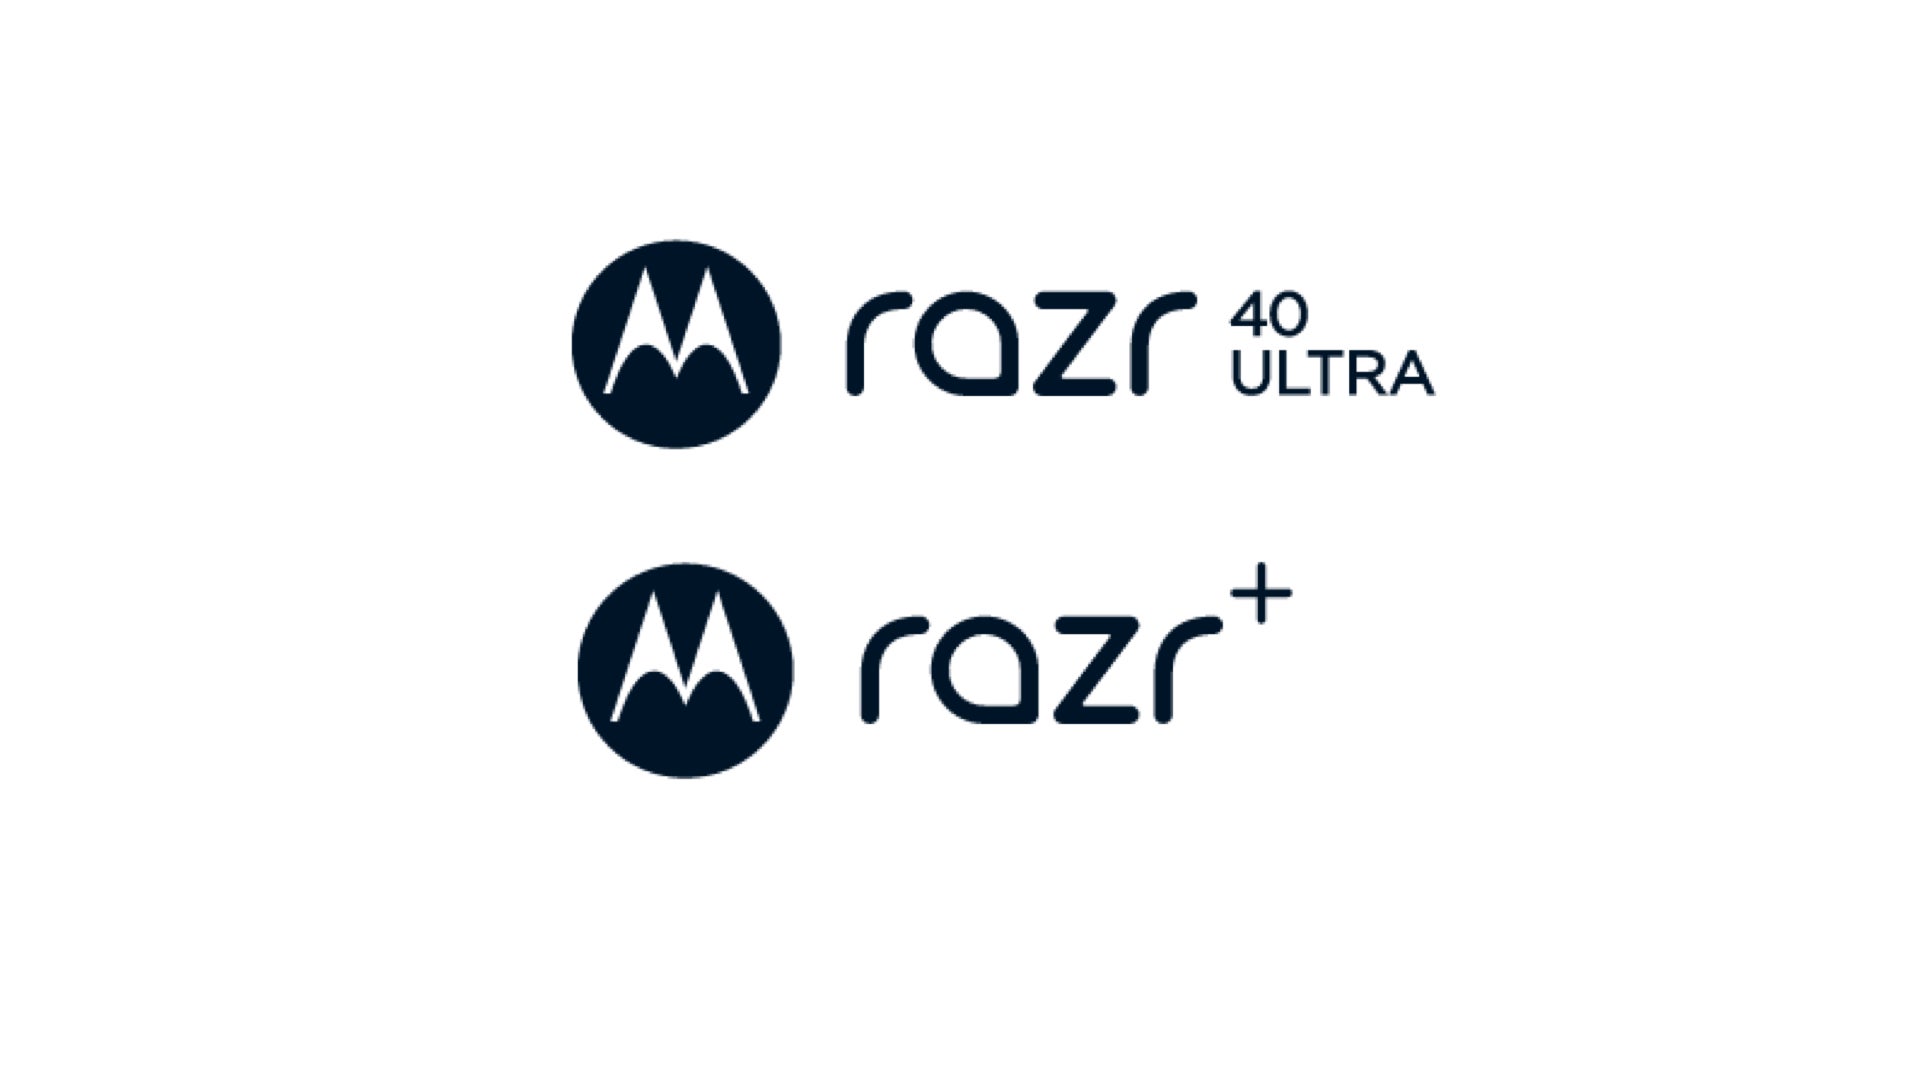 Moto Razr 40 name and cover display information leaks - PhoneArena